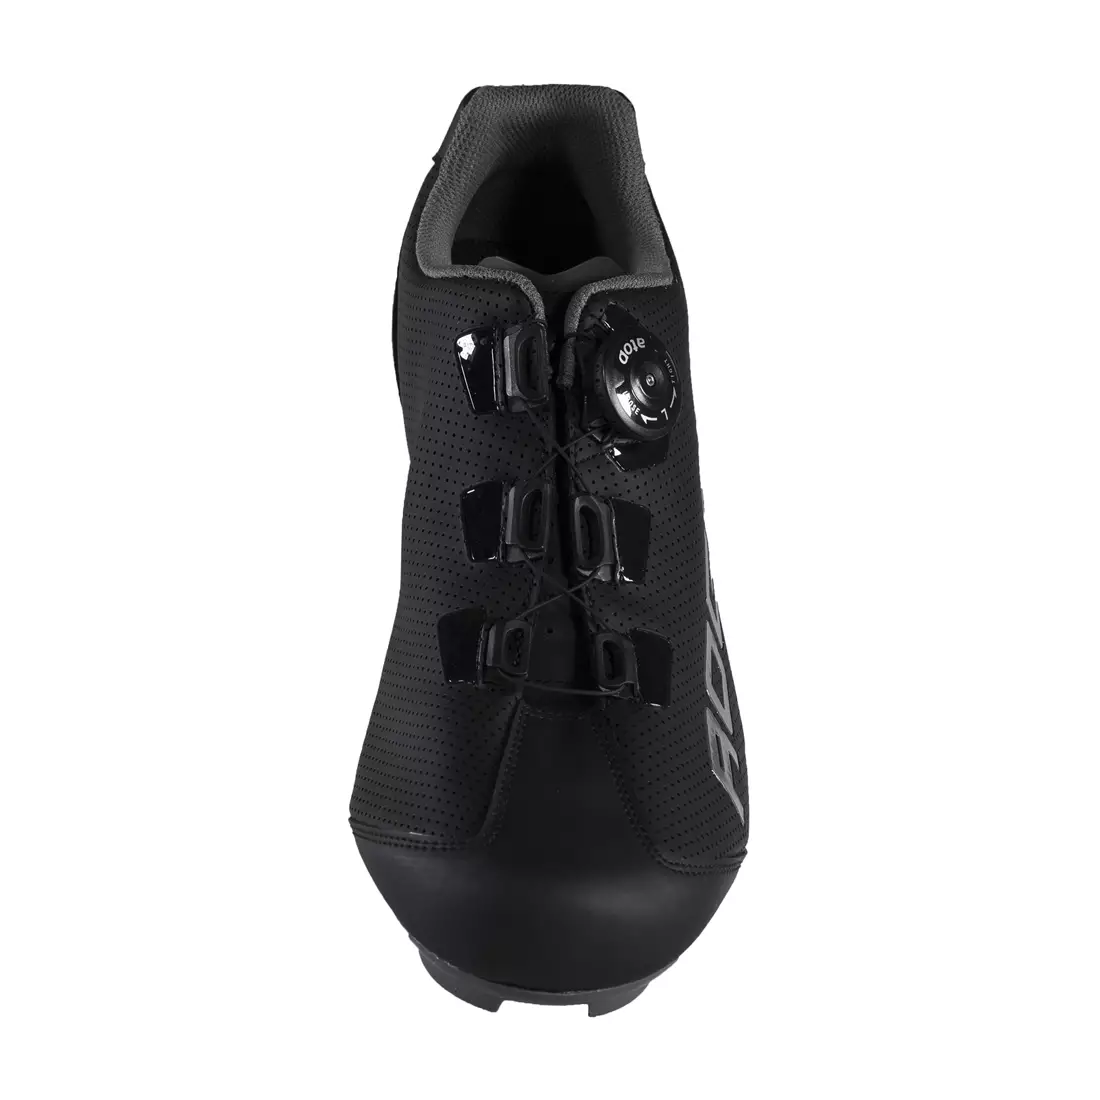 ROGELLI AB-410 road cycling shoes, black